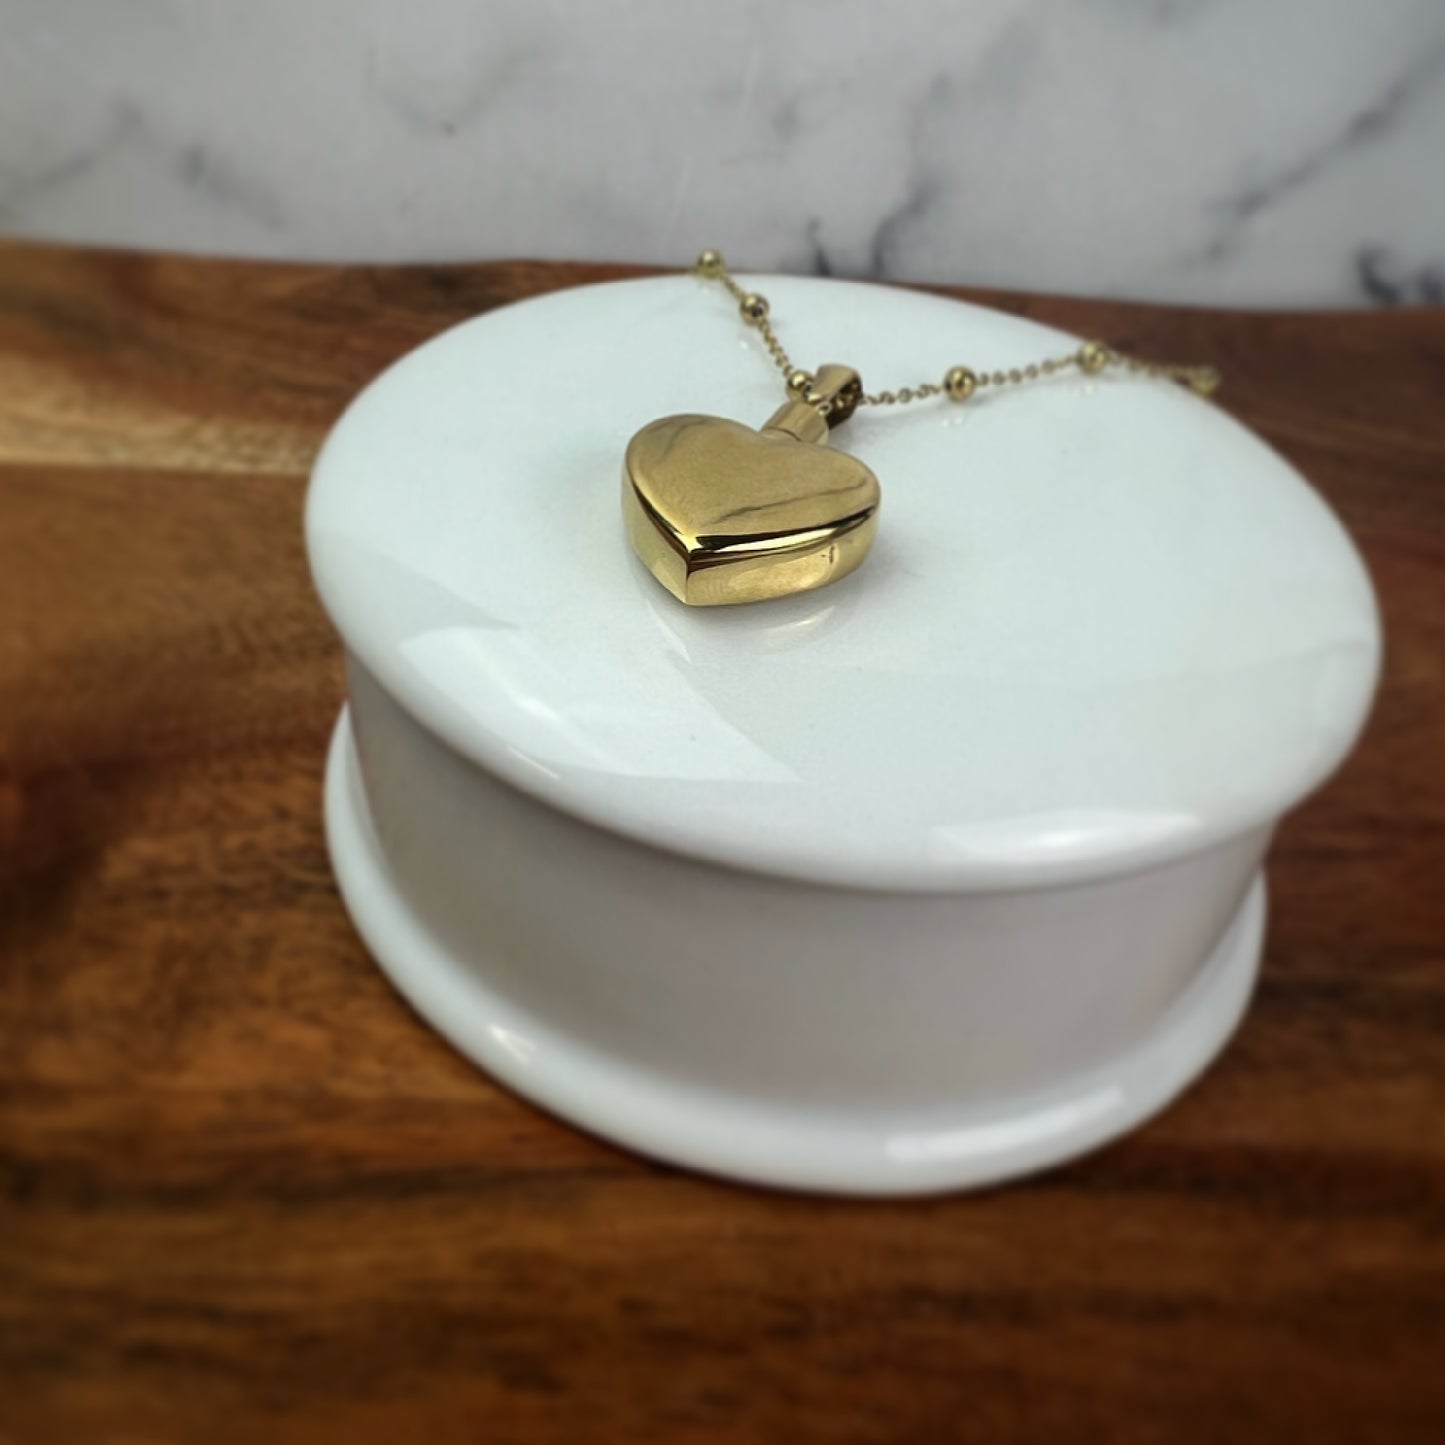 Cremation Urn Necklace | Memorial Jewelry Keepsake | Heart Pendant